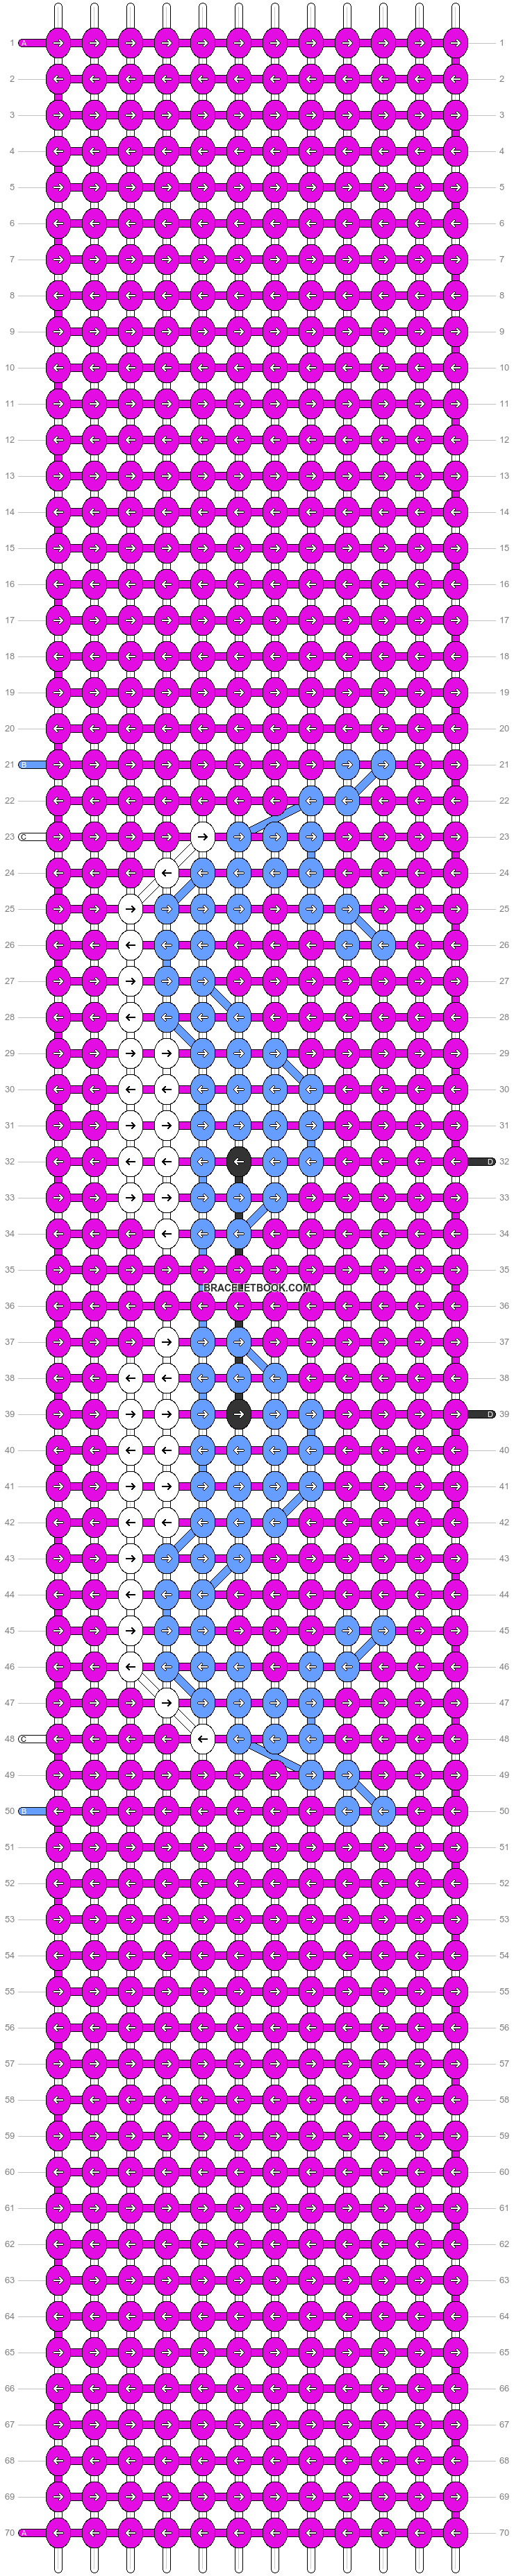 Alpha pattern #46992 variation #79545 pattern